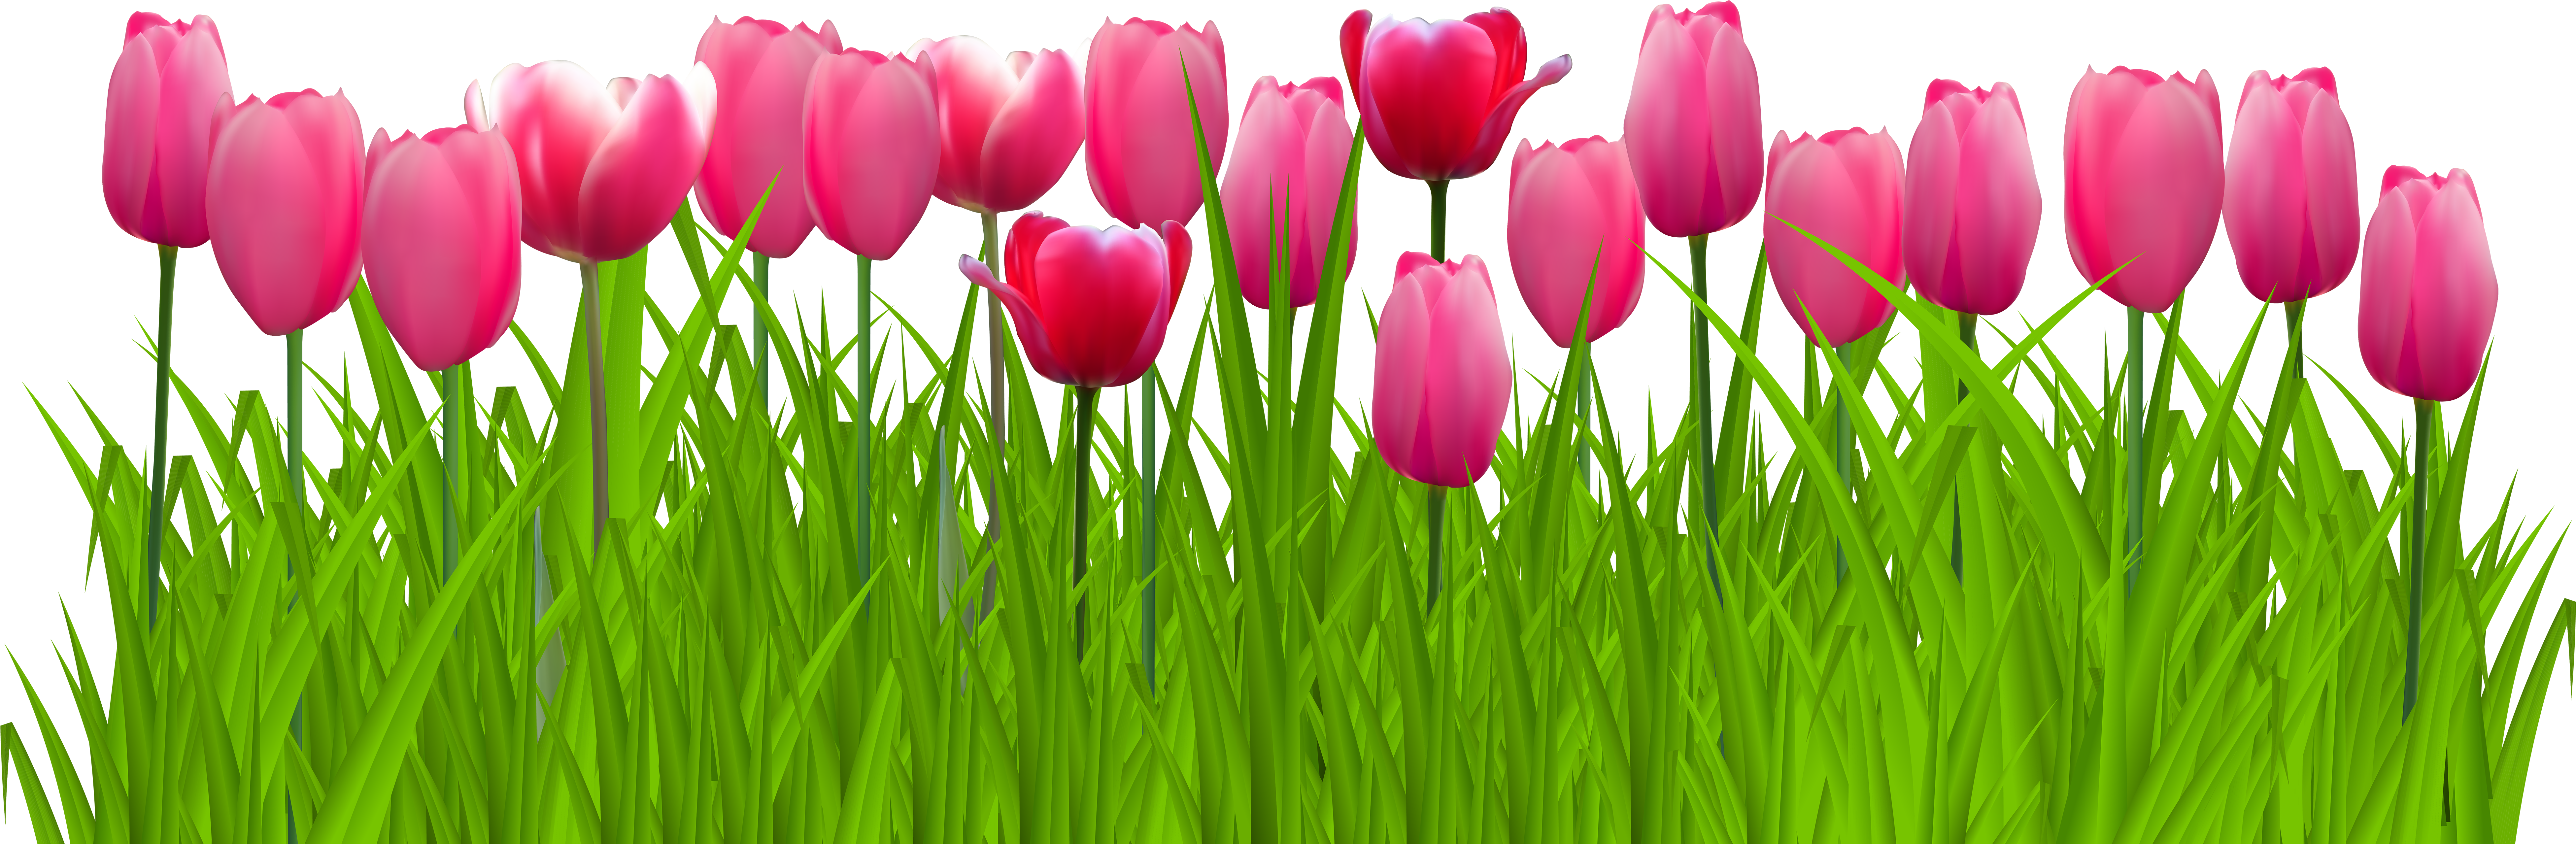 Vibrant Pink Tulips Row